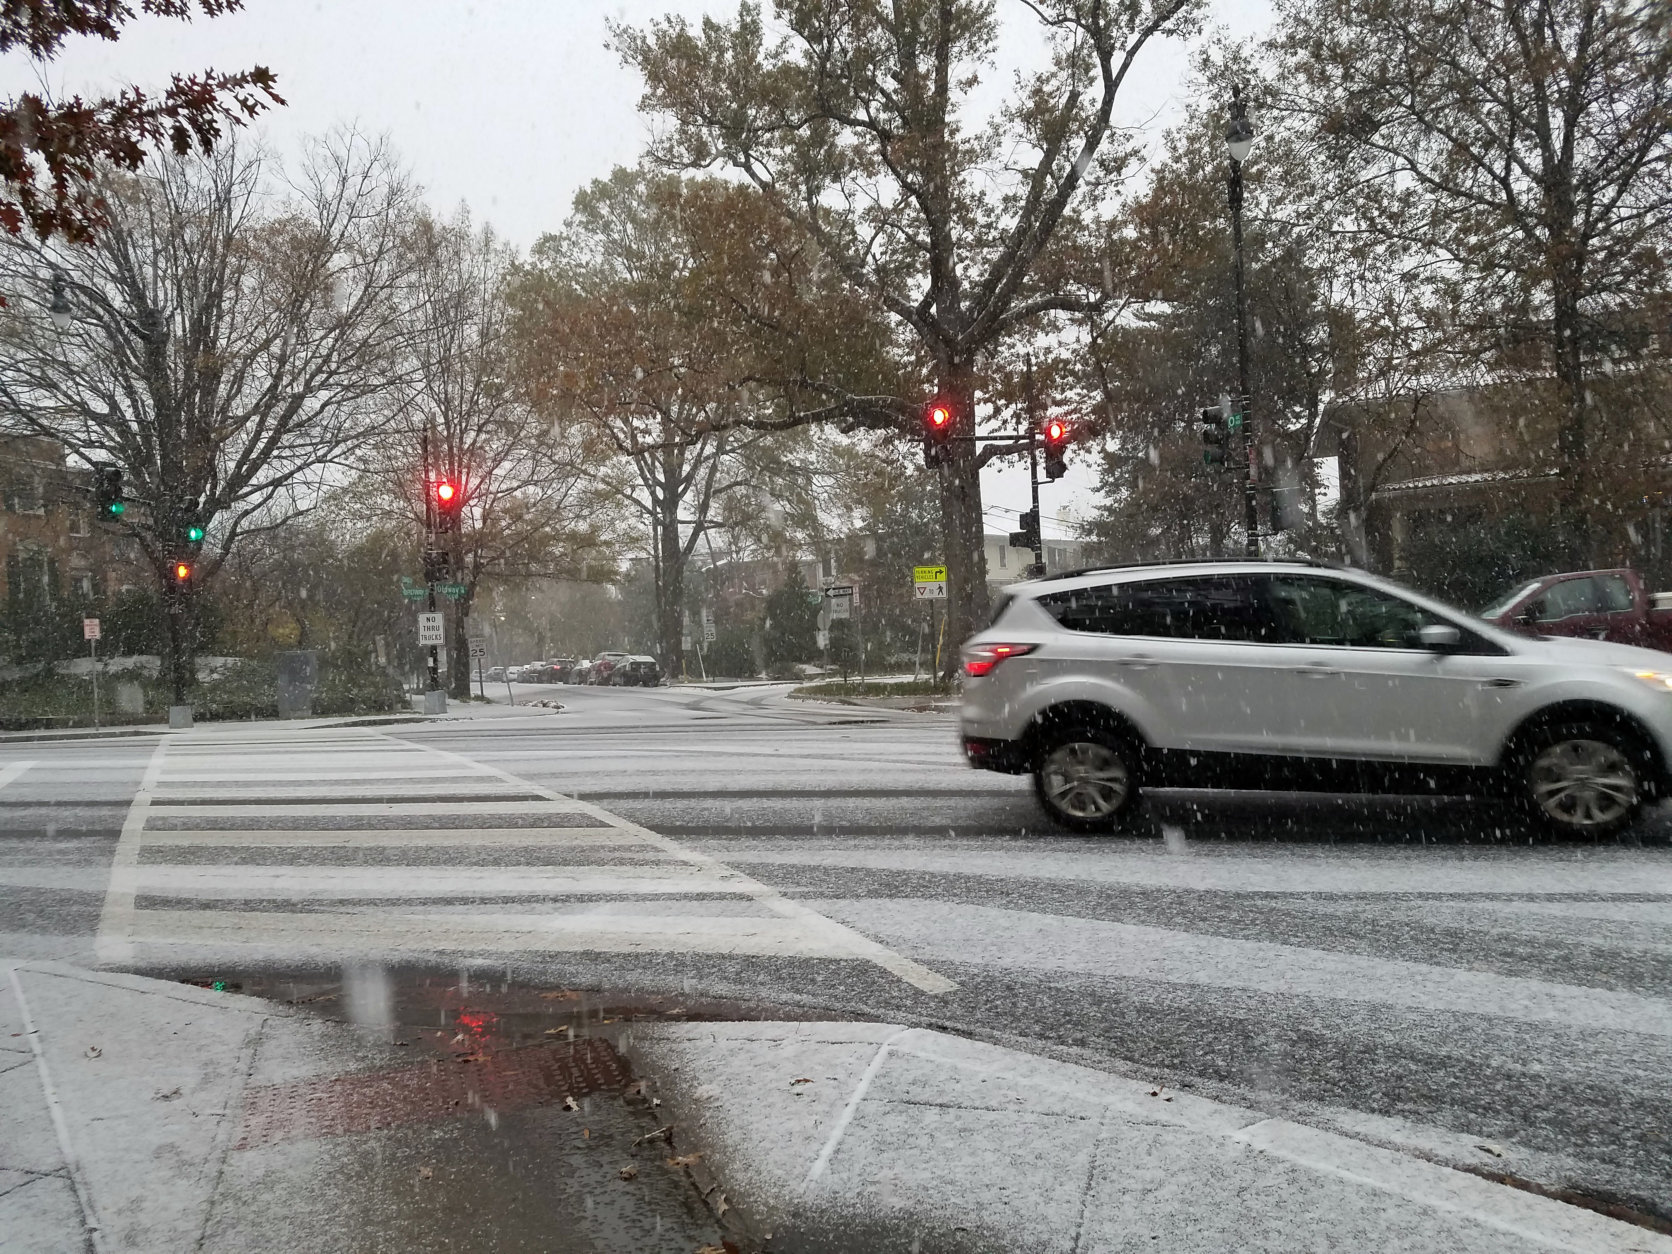 Cars make their way through Northwest D.C. as snow falls Thursday. (WTOP/Will Vitka)